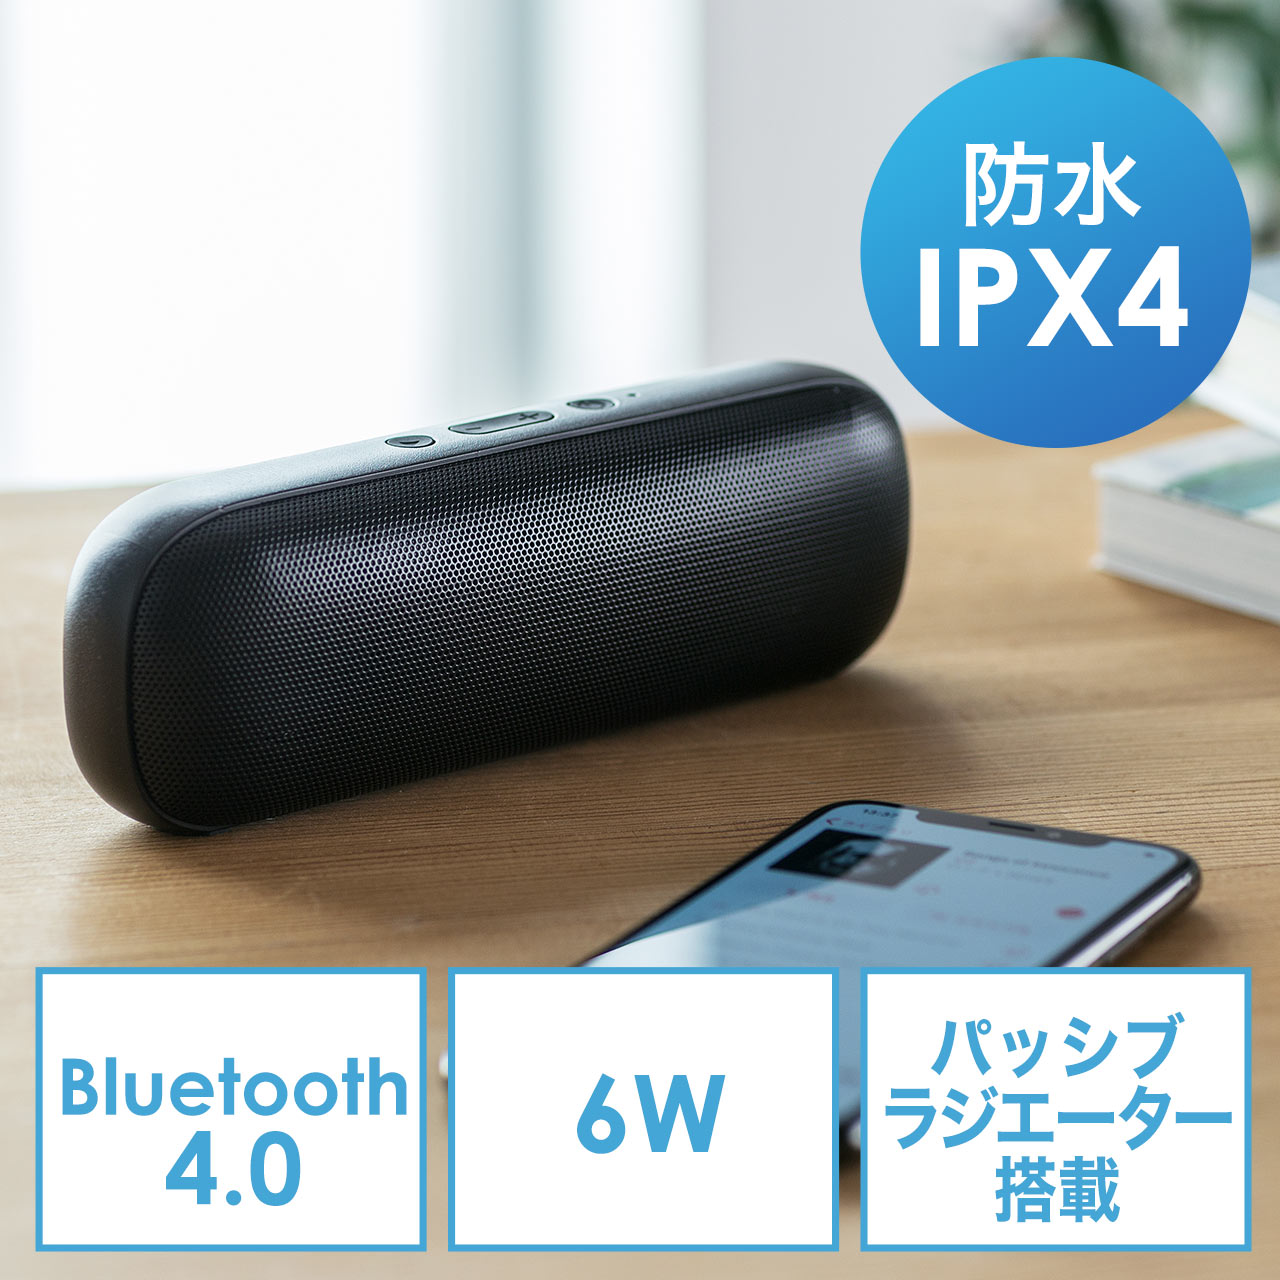 BluetoothXs[J[ihEIPX4EEBluetooth4.0E6Wj 400-SP074